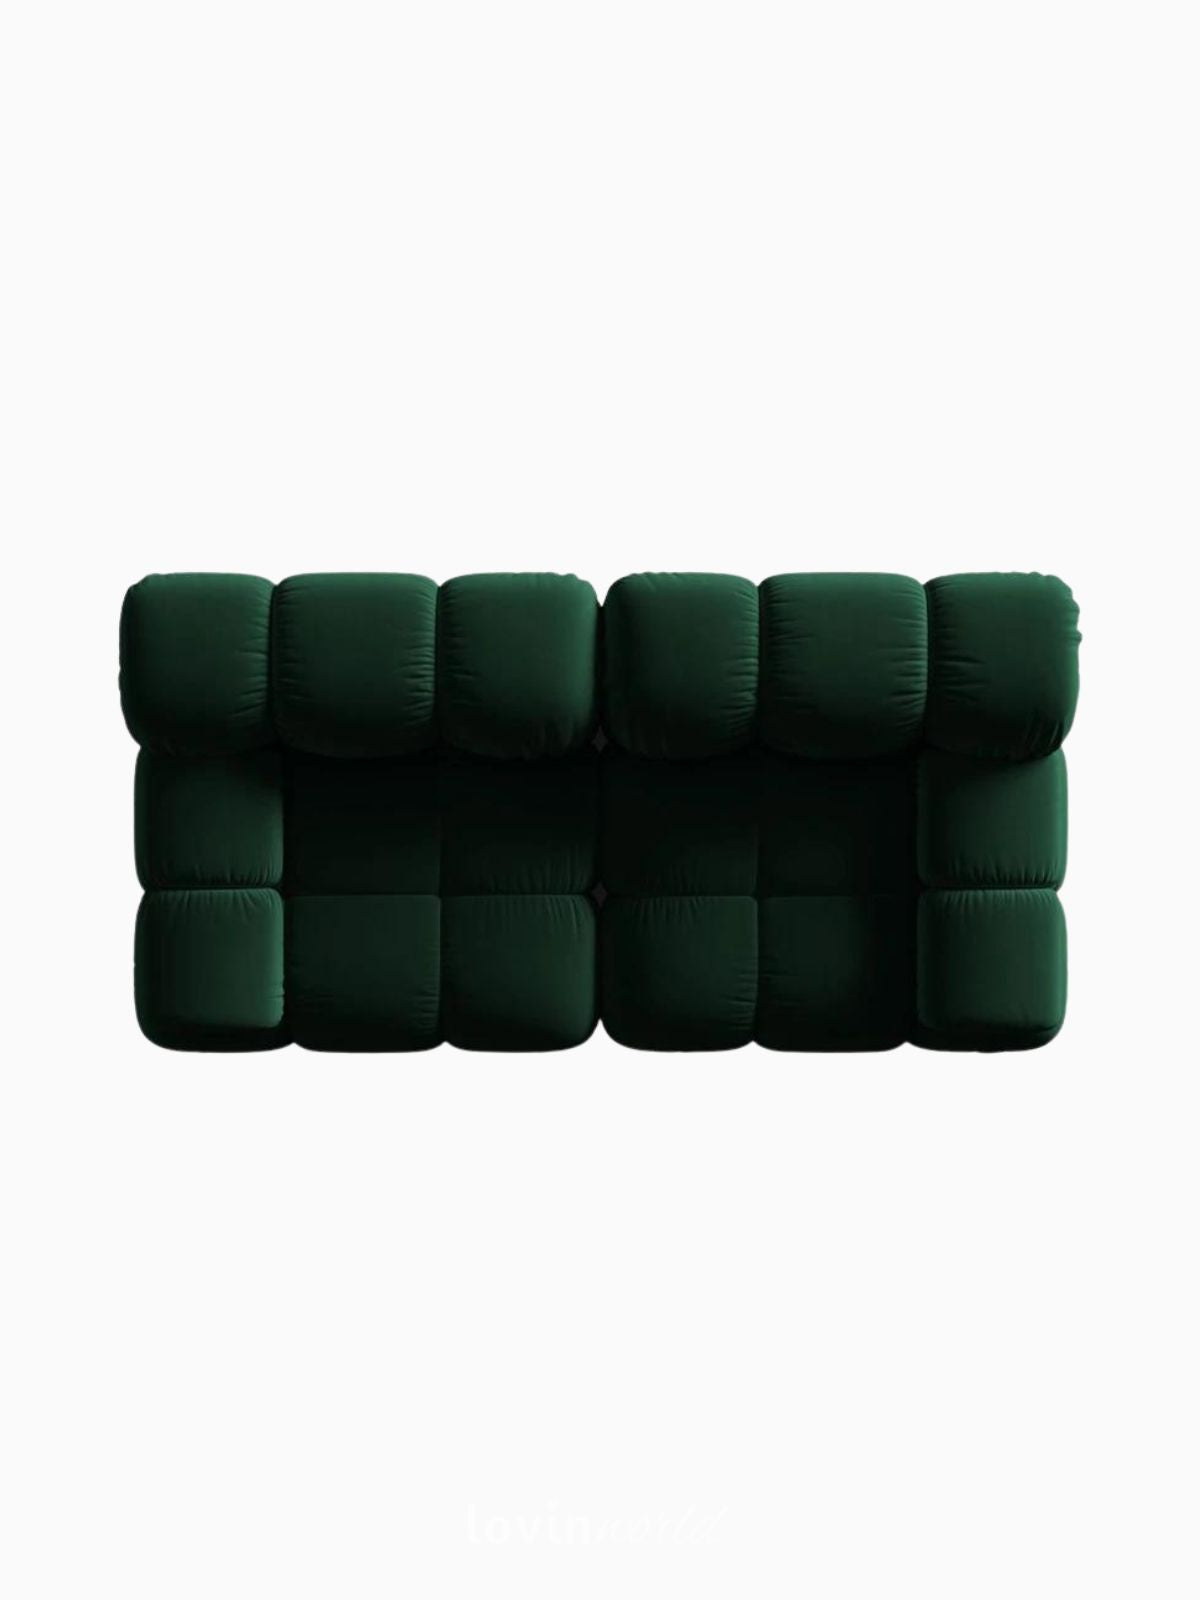 Divano modulare 2 posti Bellis in velluto, colore verde-4